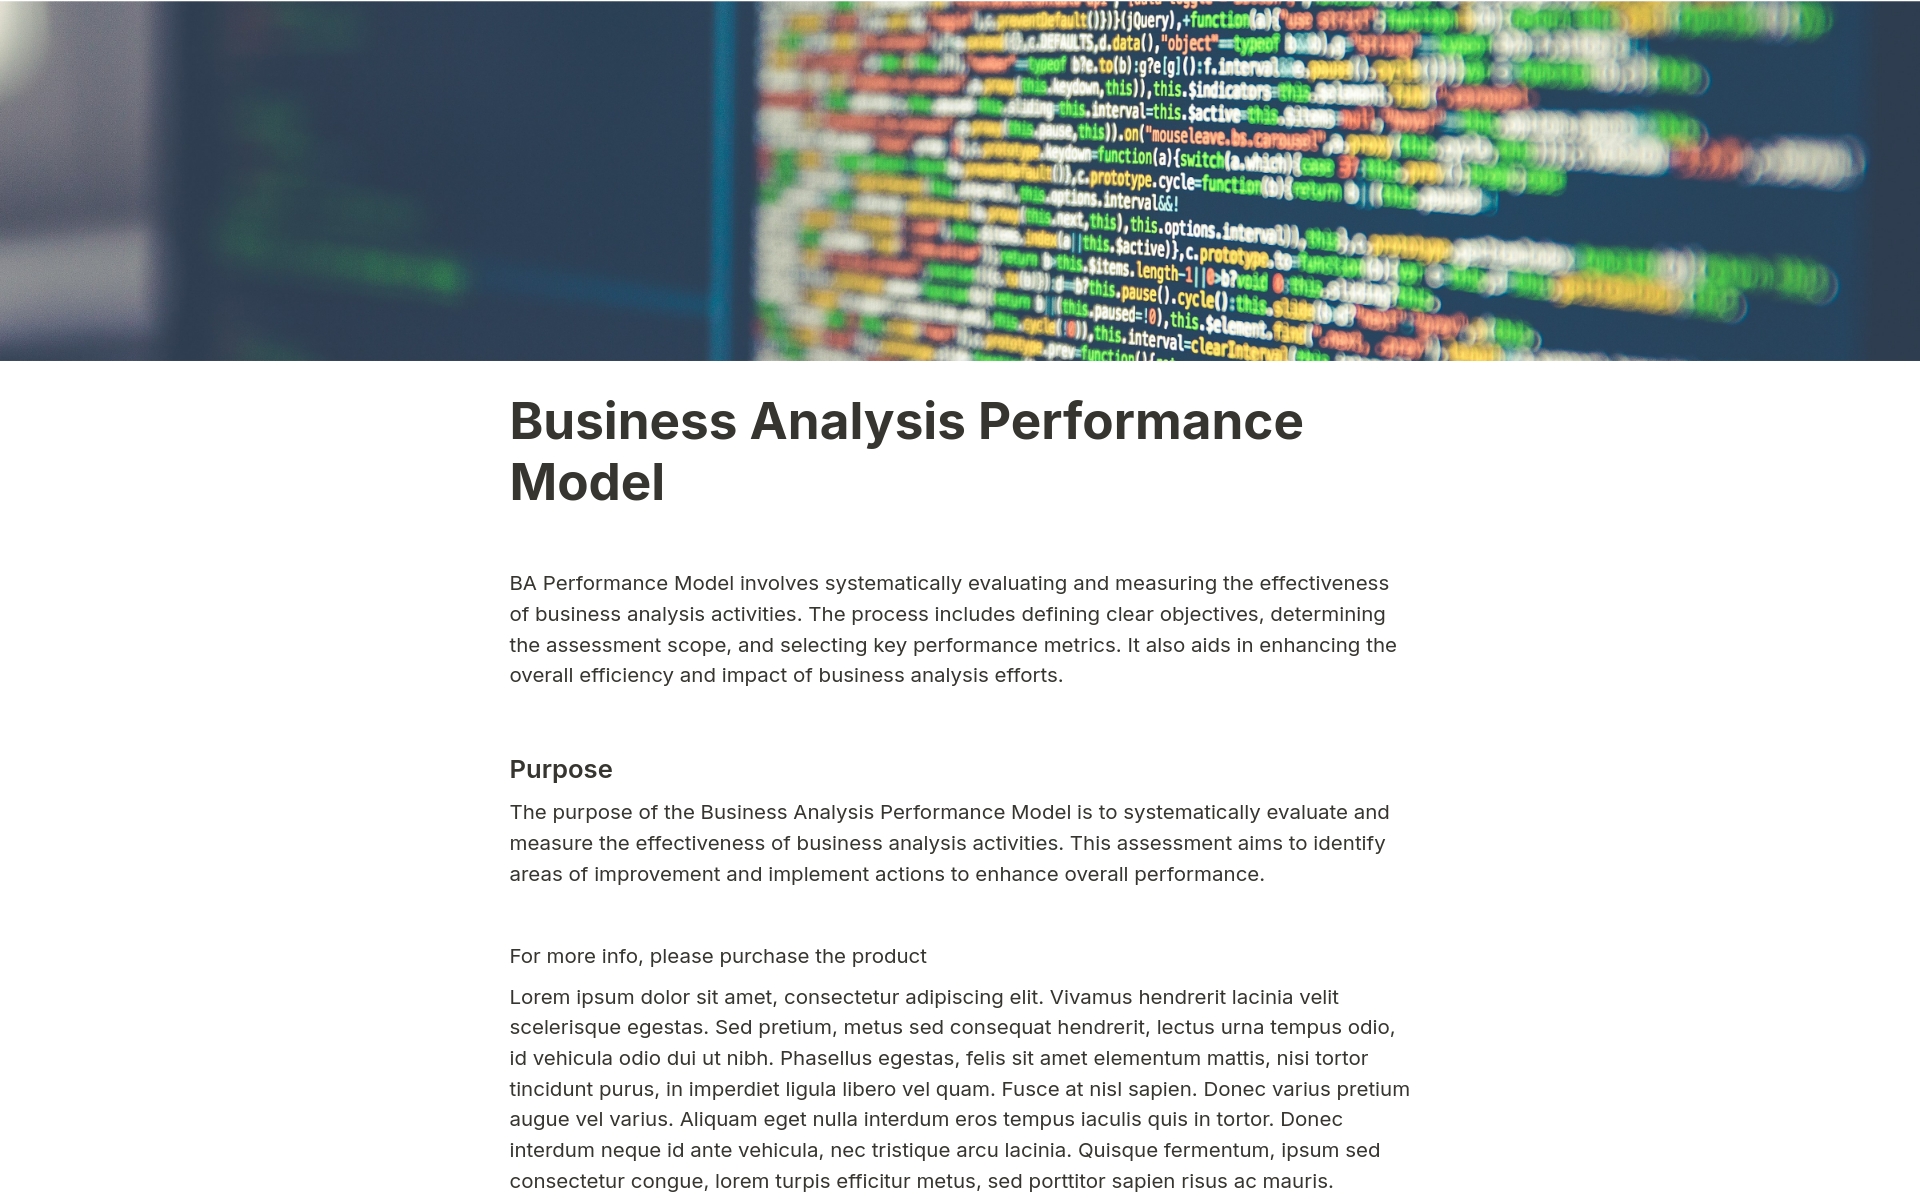 Vista previa de plantilla para Business Analysis Performance Model